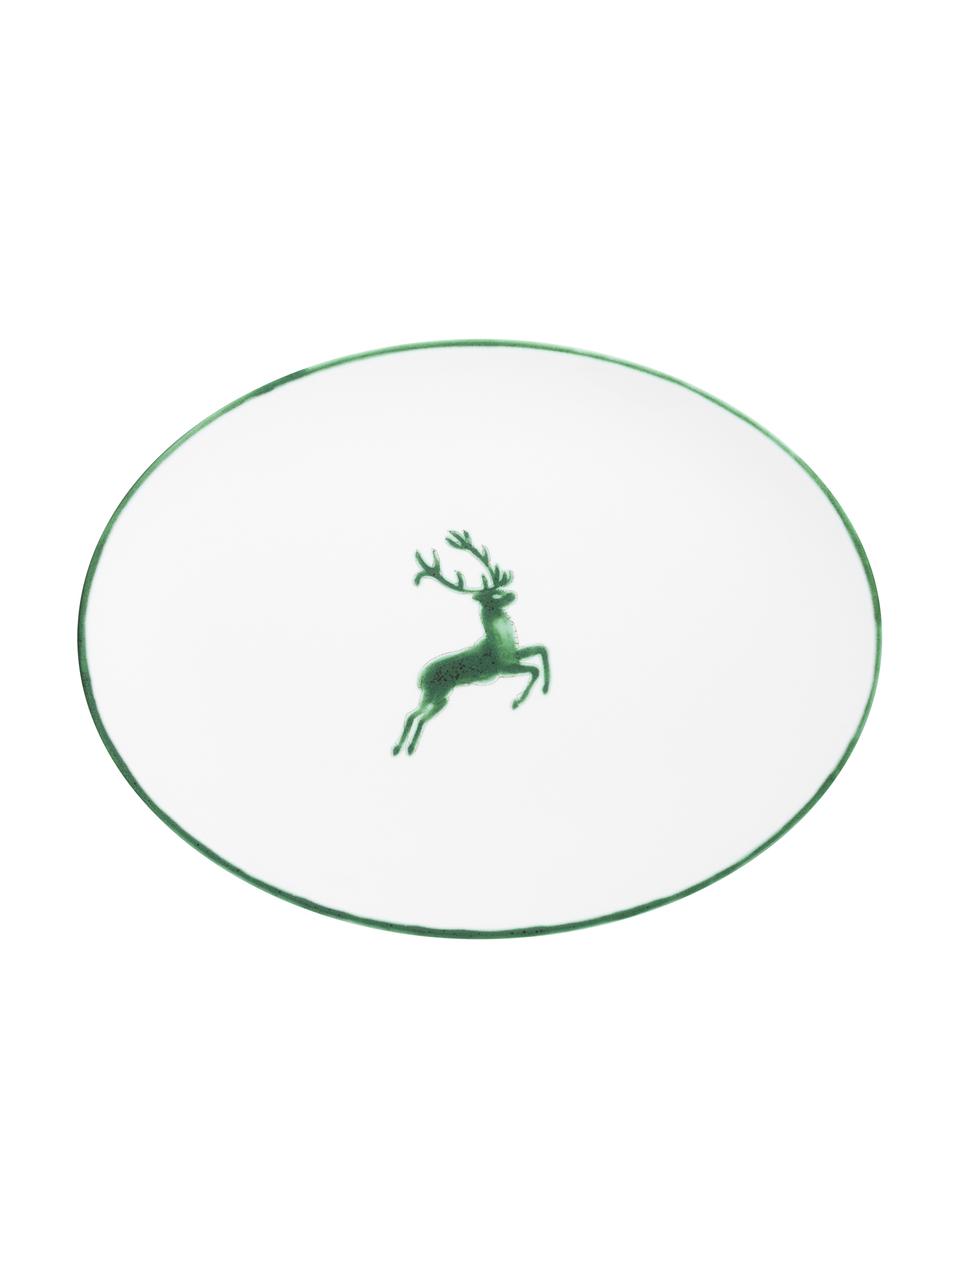 Plat de service artisanal Cerf Vert, Céramique, Blanc, vert, larg. 21 x long. 28 cm